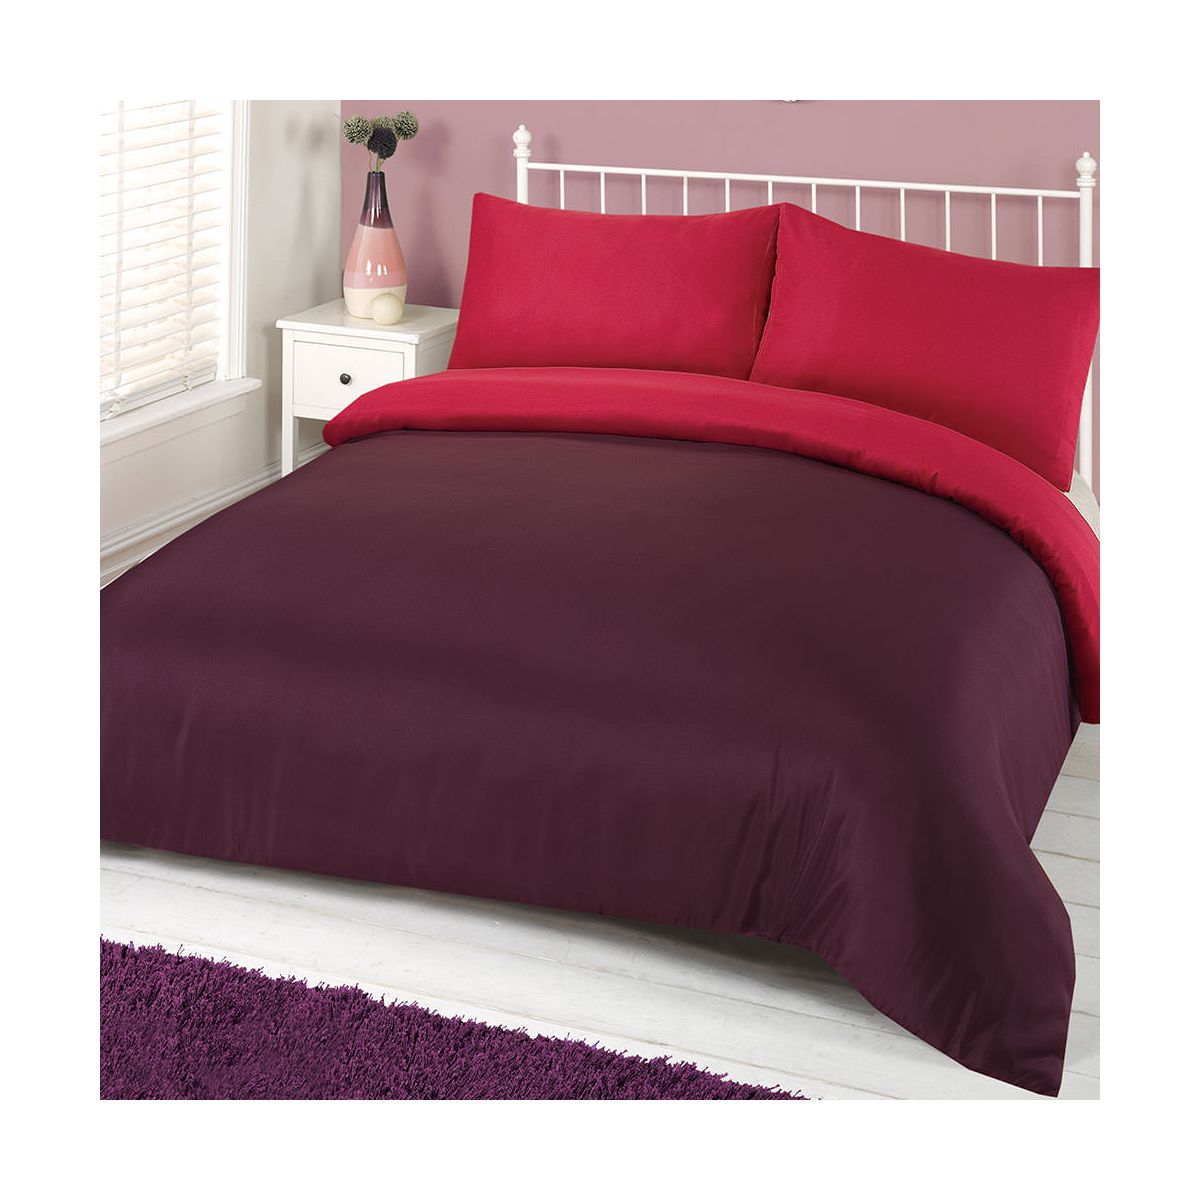 Brentfords Plain Duvet Double Cover with Pillowcases- Purple/Pink